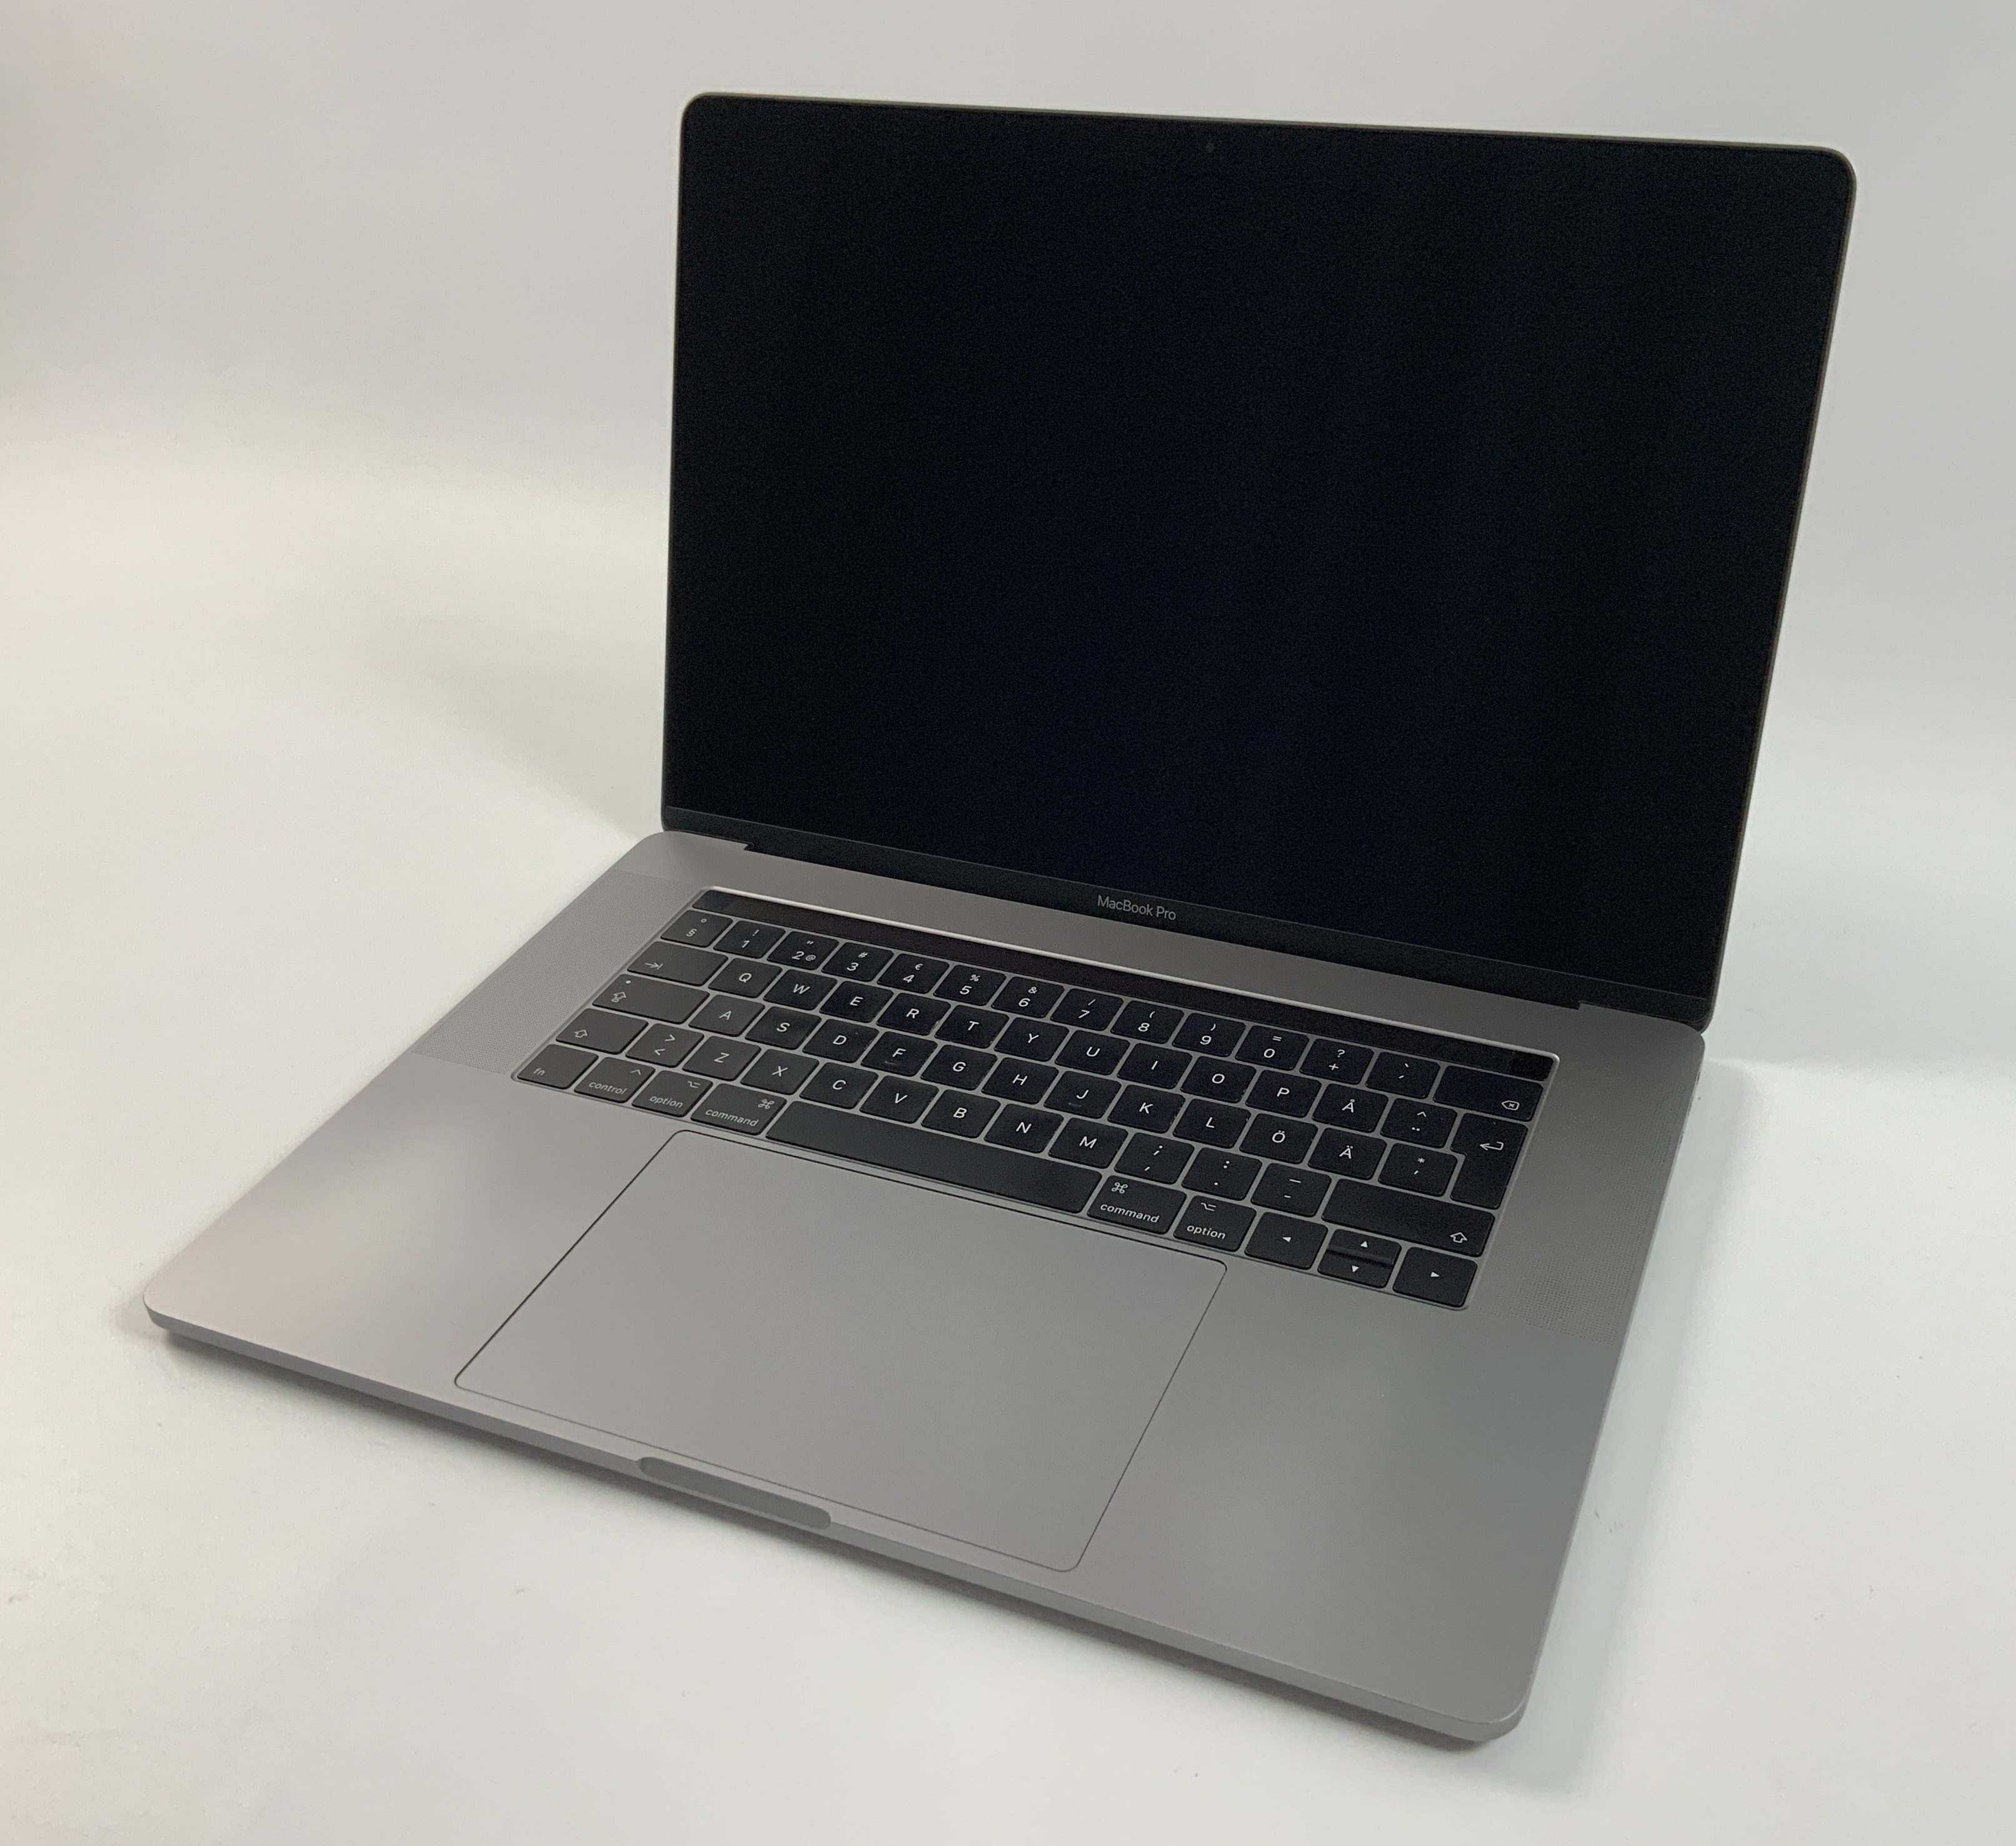 MacBook Pro 15" Touch Bar Late 2016 (Intel Quad-Core i7 2.9 GHz 16 GB RAM 1 TB SSD), Space Gray, Intel Quad-Core i7 2.9 GHz, 16 GB RAM, 1 TB SSD, Bild 1